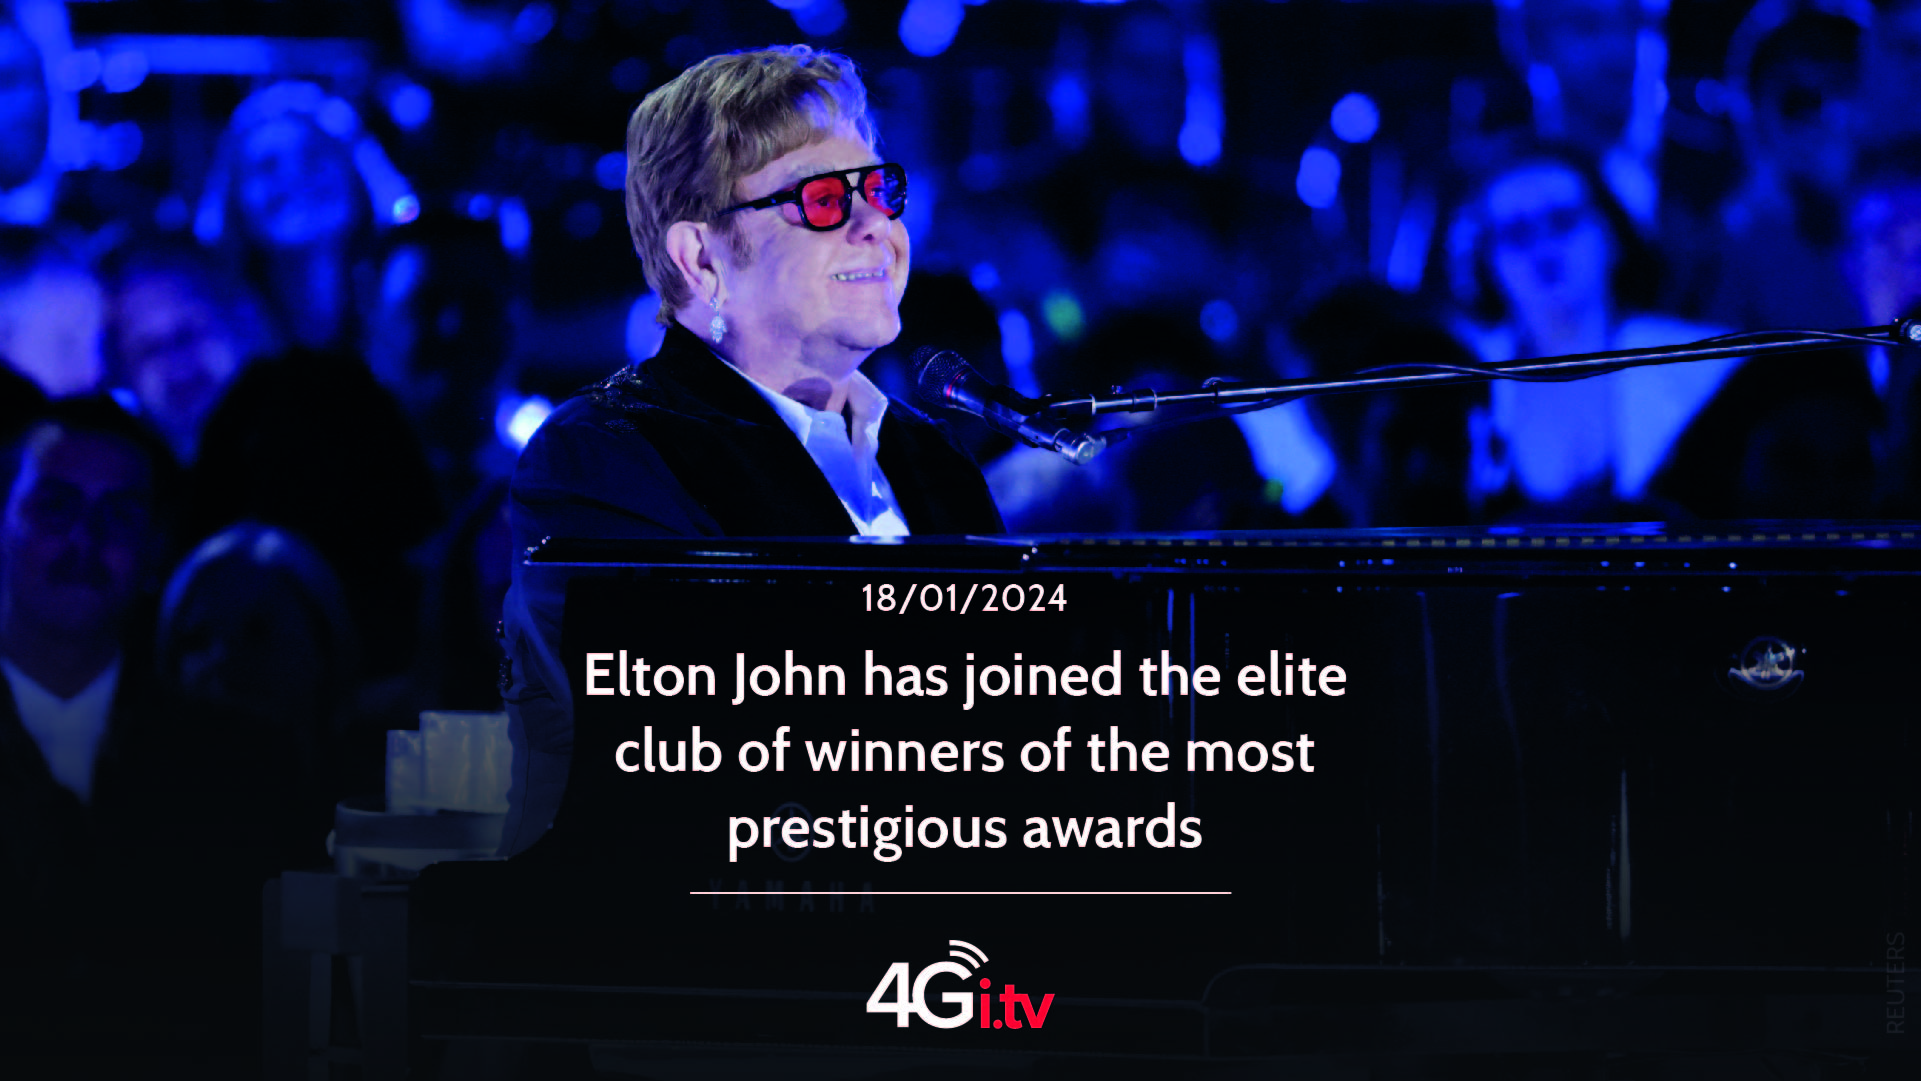 Lesen Sie mehr über den Artikel Elton John has joined the elite club of winners of the most prestigious awards